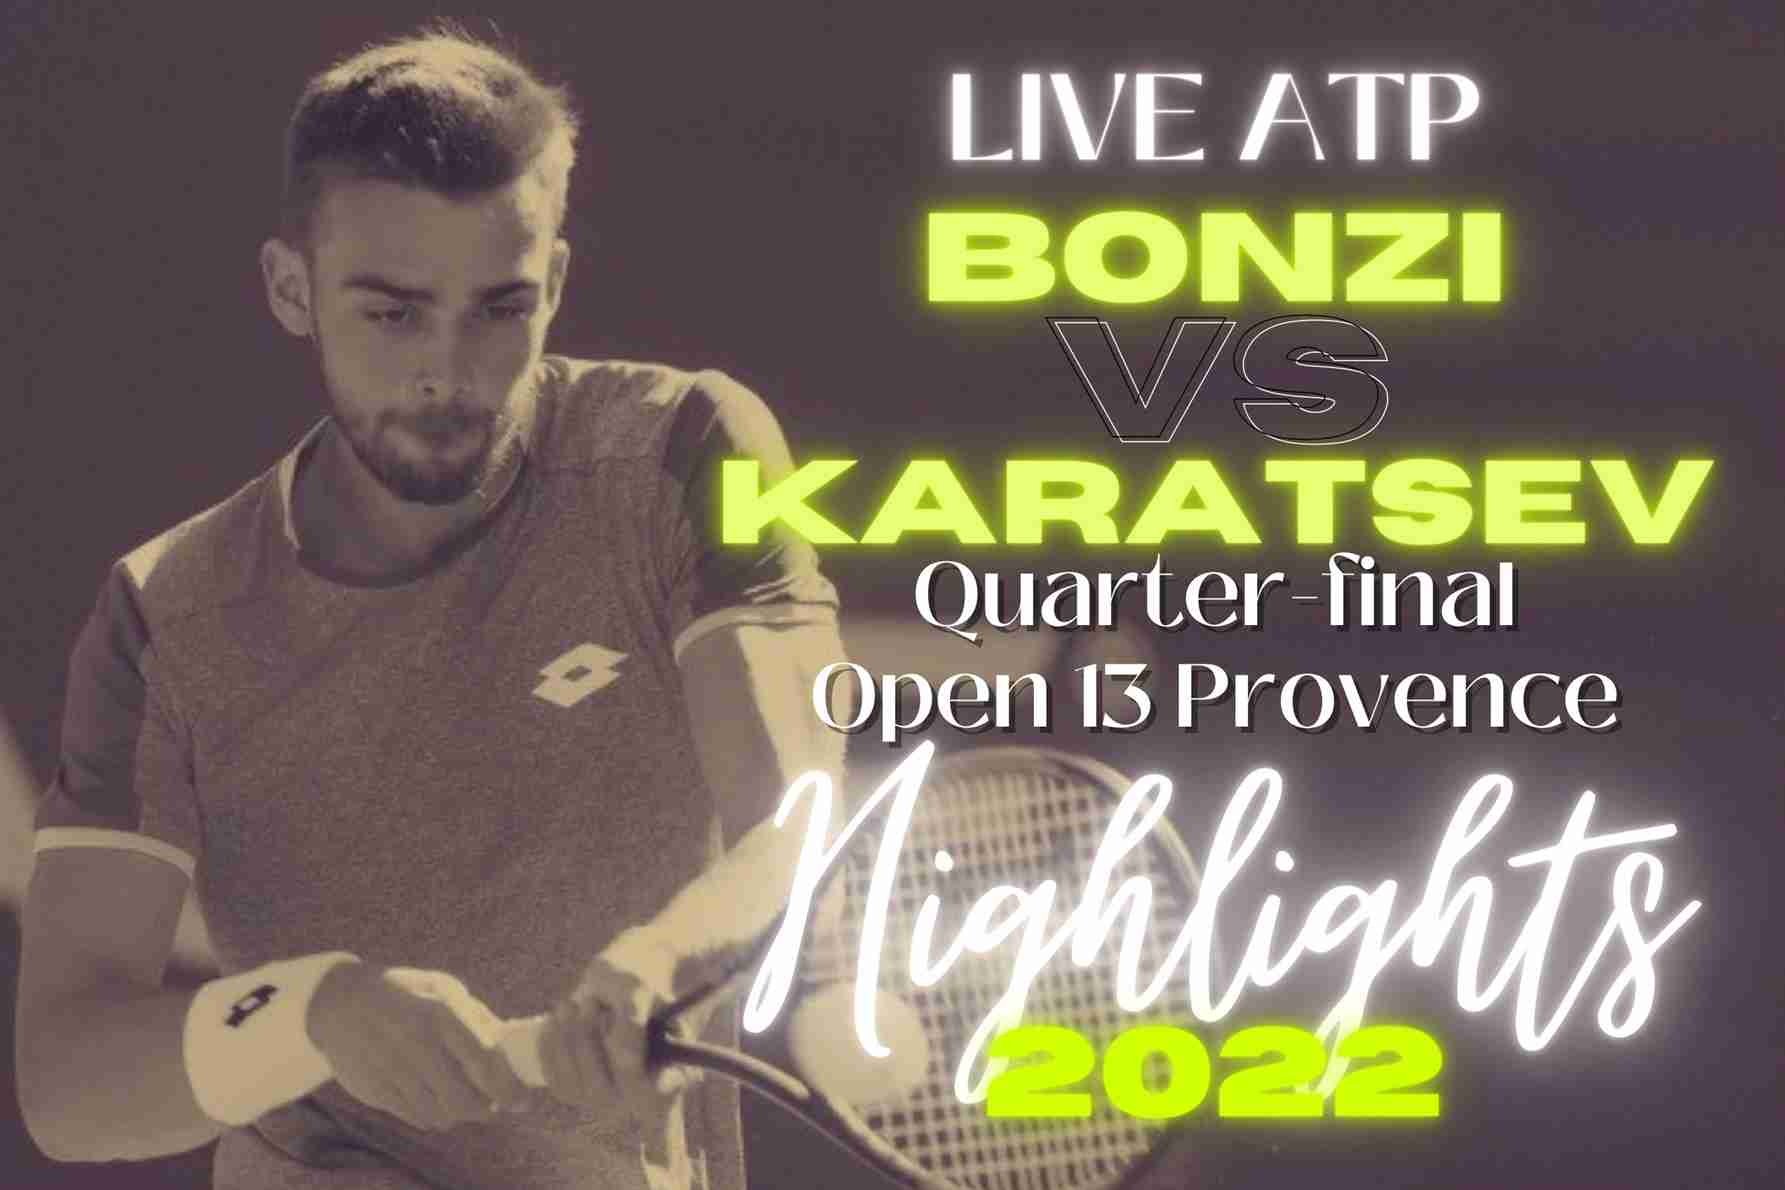 Bonzi Vs Karatsev Quarterfinal 2022 Highlights